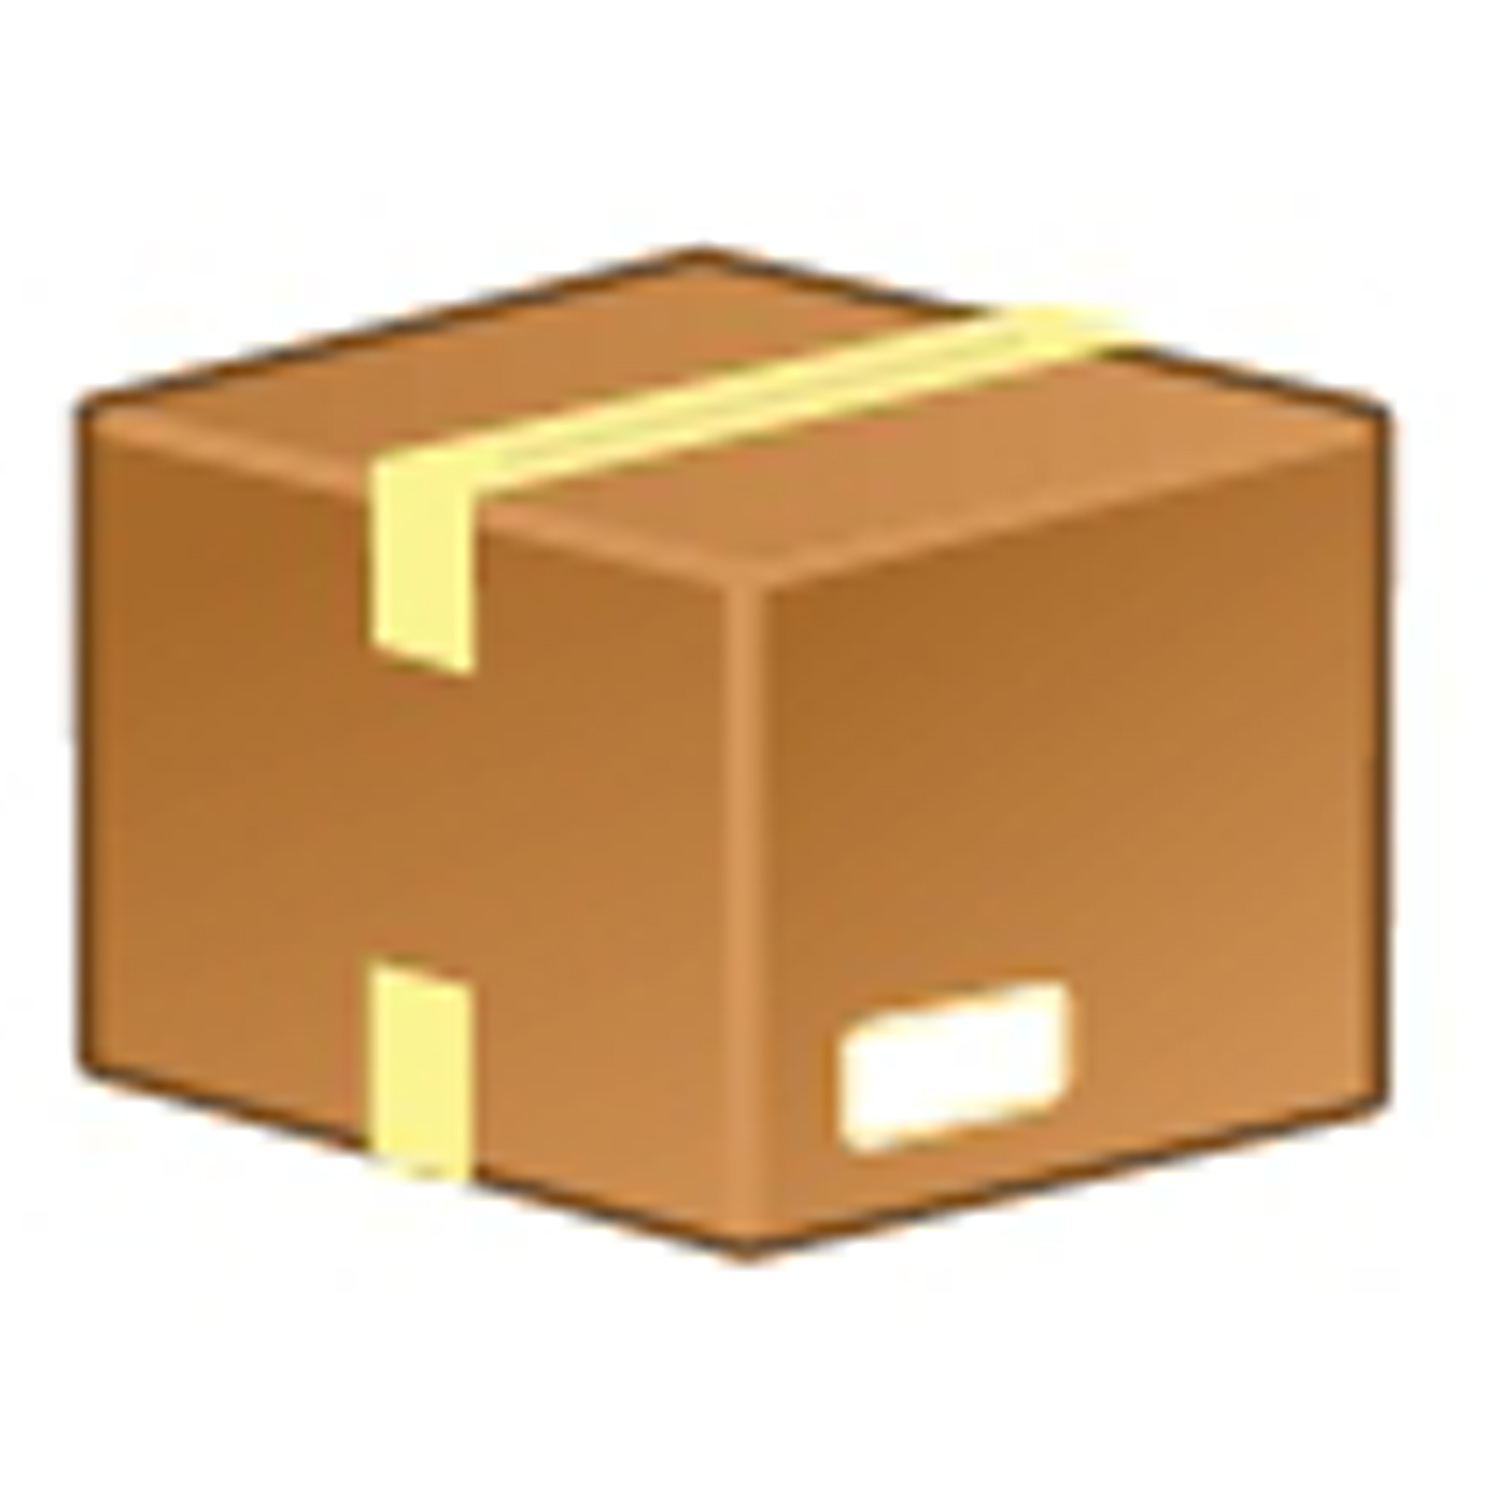 Webster Cartonization box icon